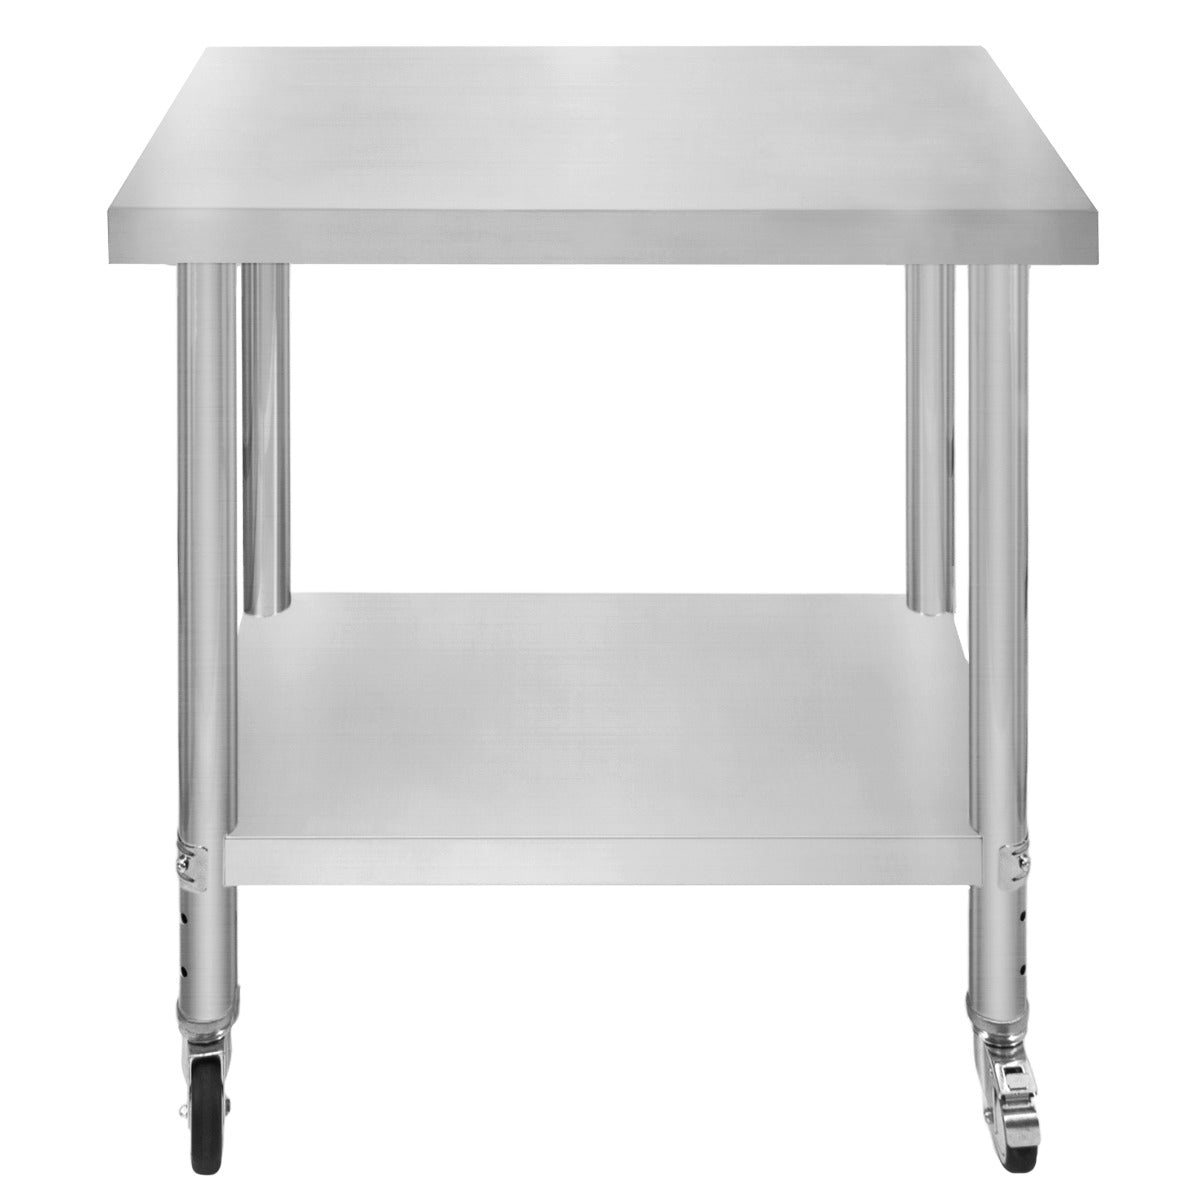 KuKoo Work Table – 76cm x 45cm x 86cm